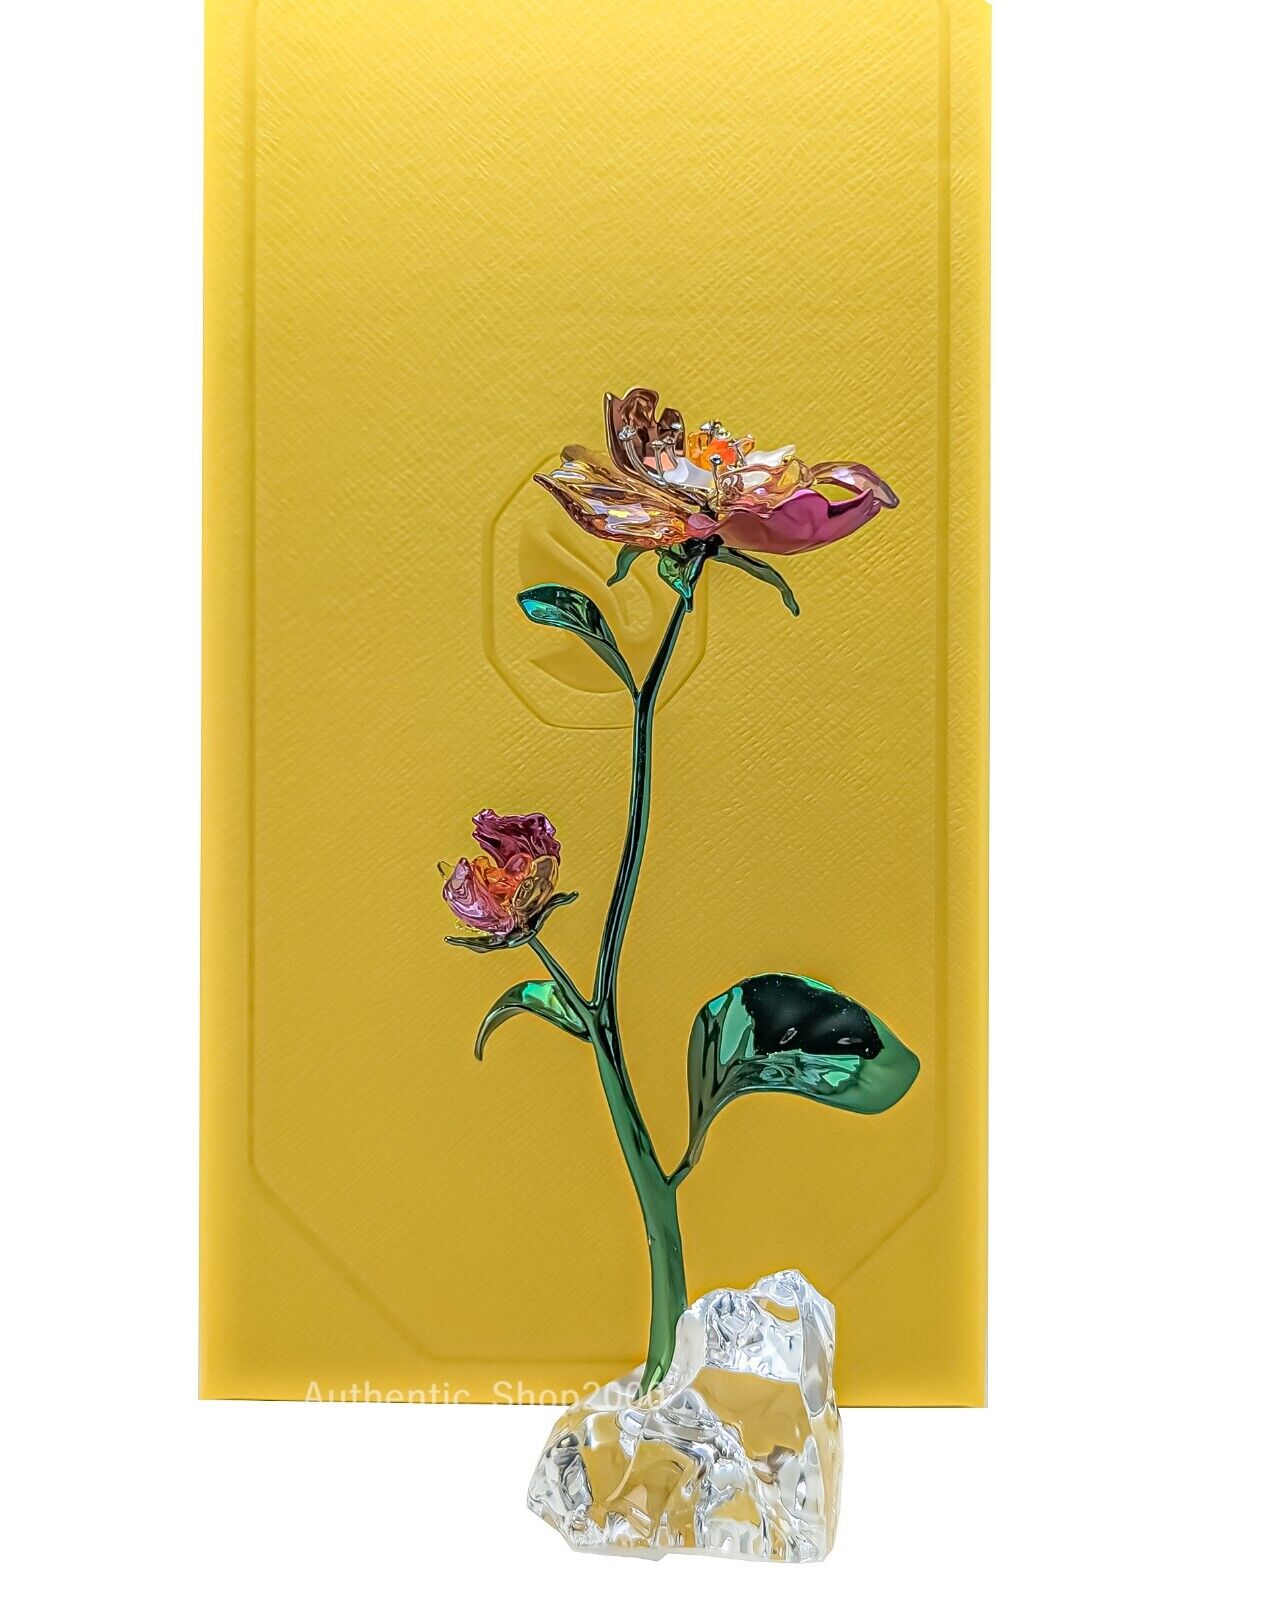 New 100% Auth SWAROVSKI Crystal Idyllia Flower Display Deco 5639886 in Gift Box